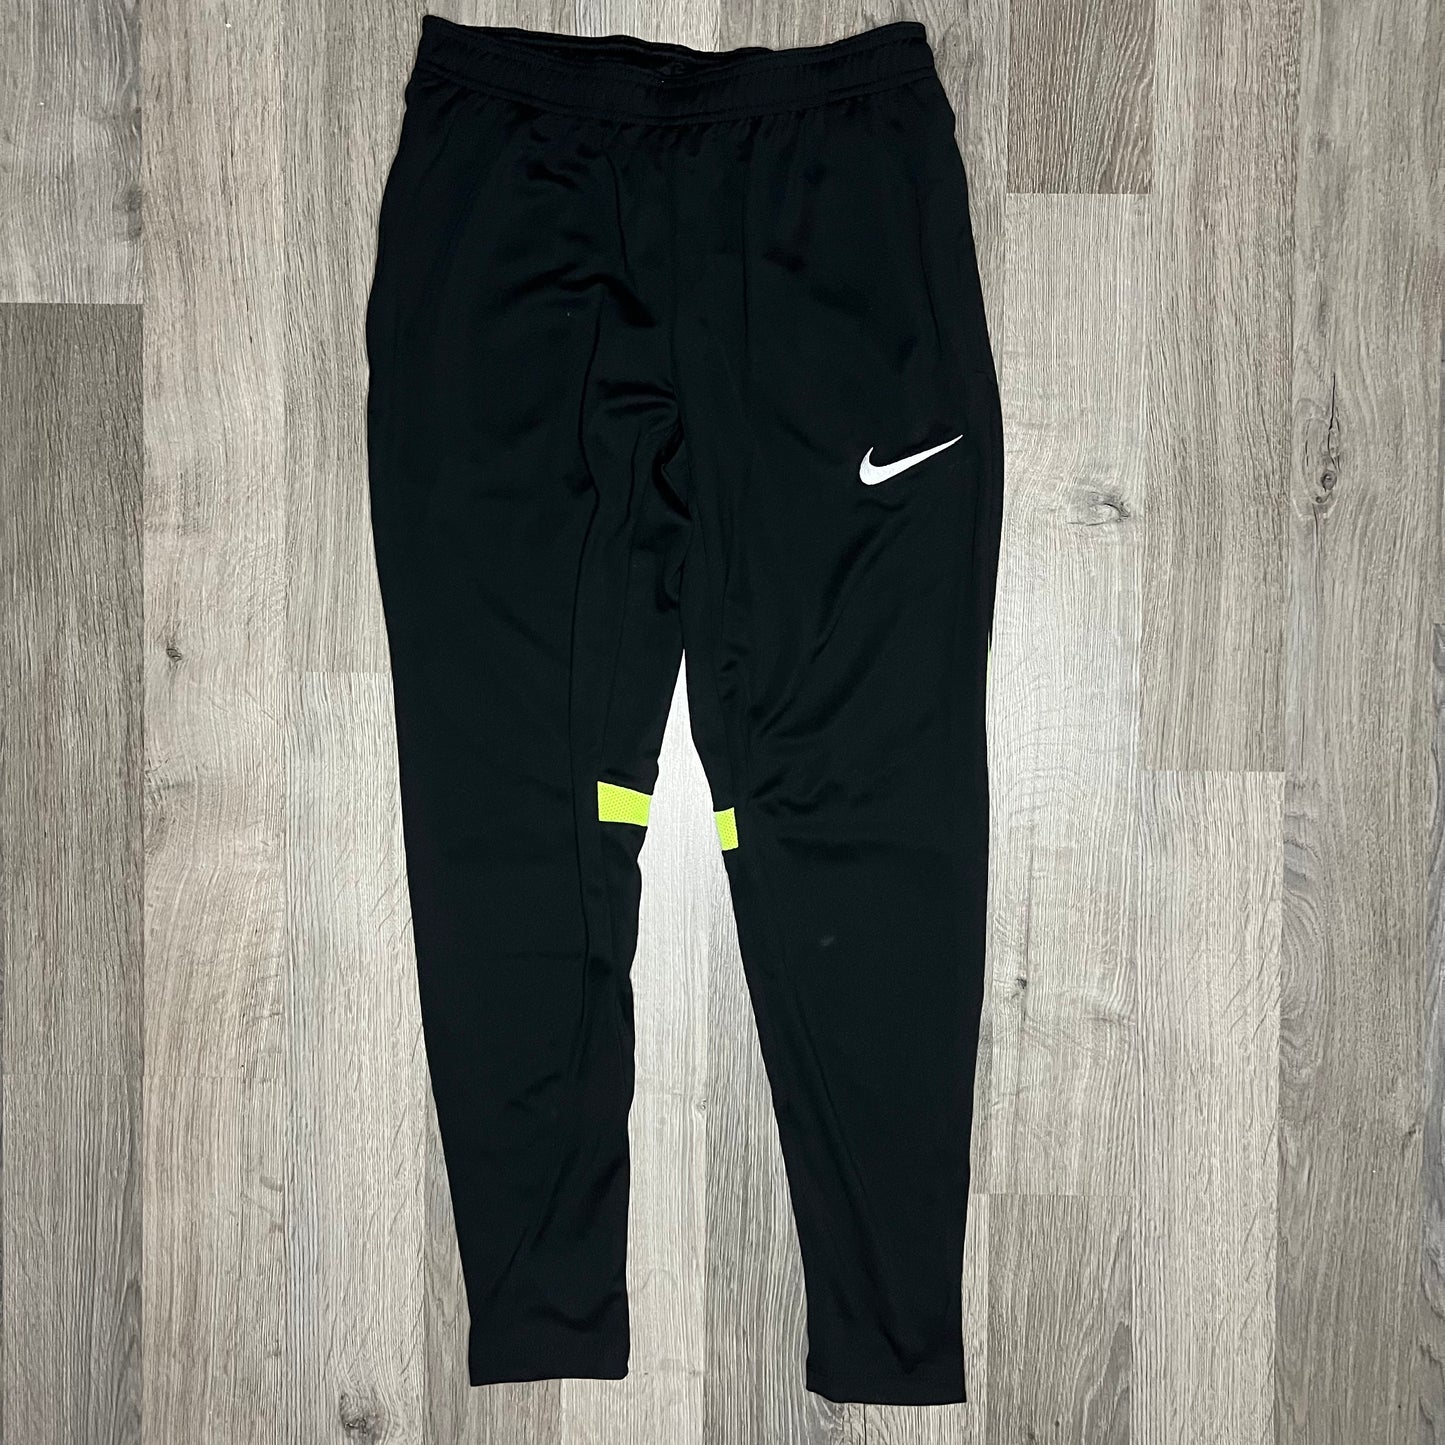 Nike Academy Bottoms - Black / Volt